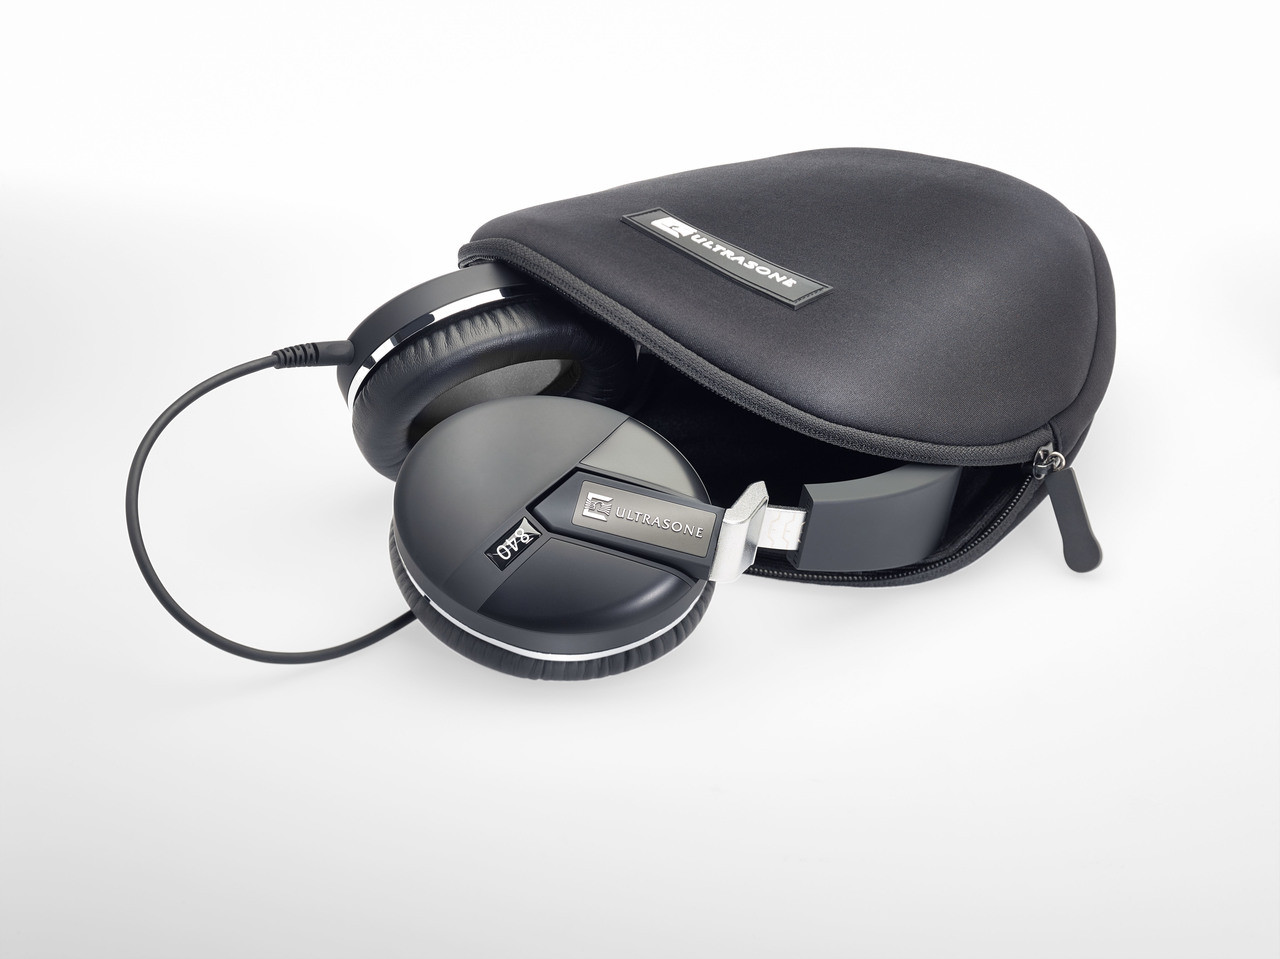 Ultrasone Performance 840 stereo closed back headphones - Audio-Depot